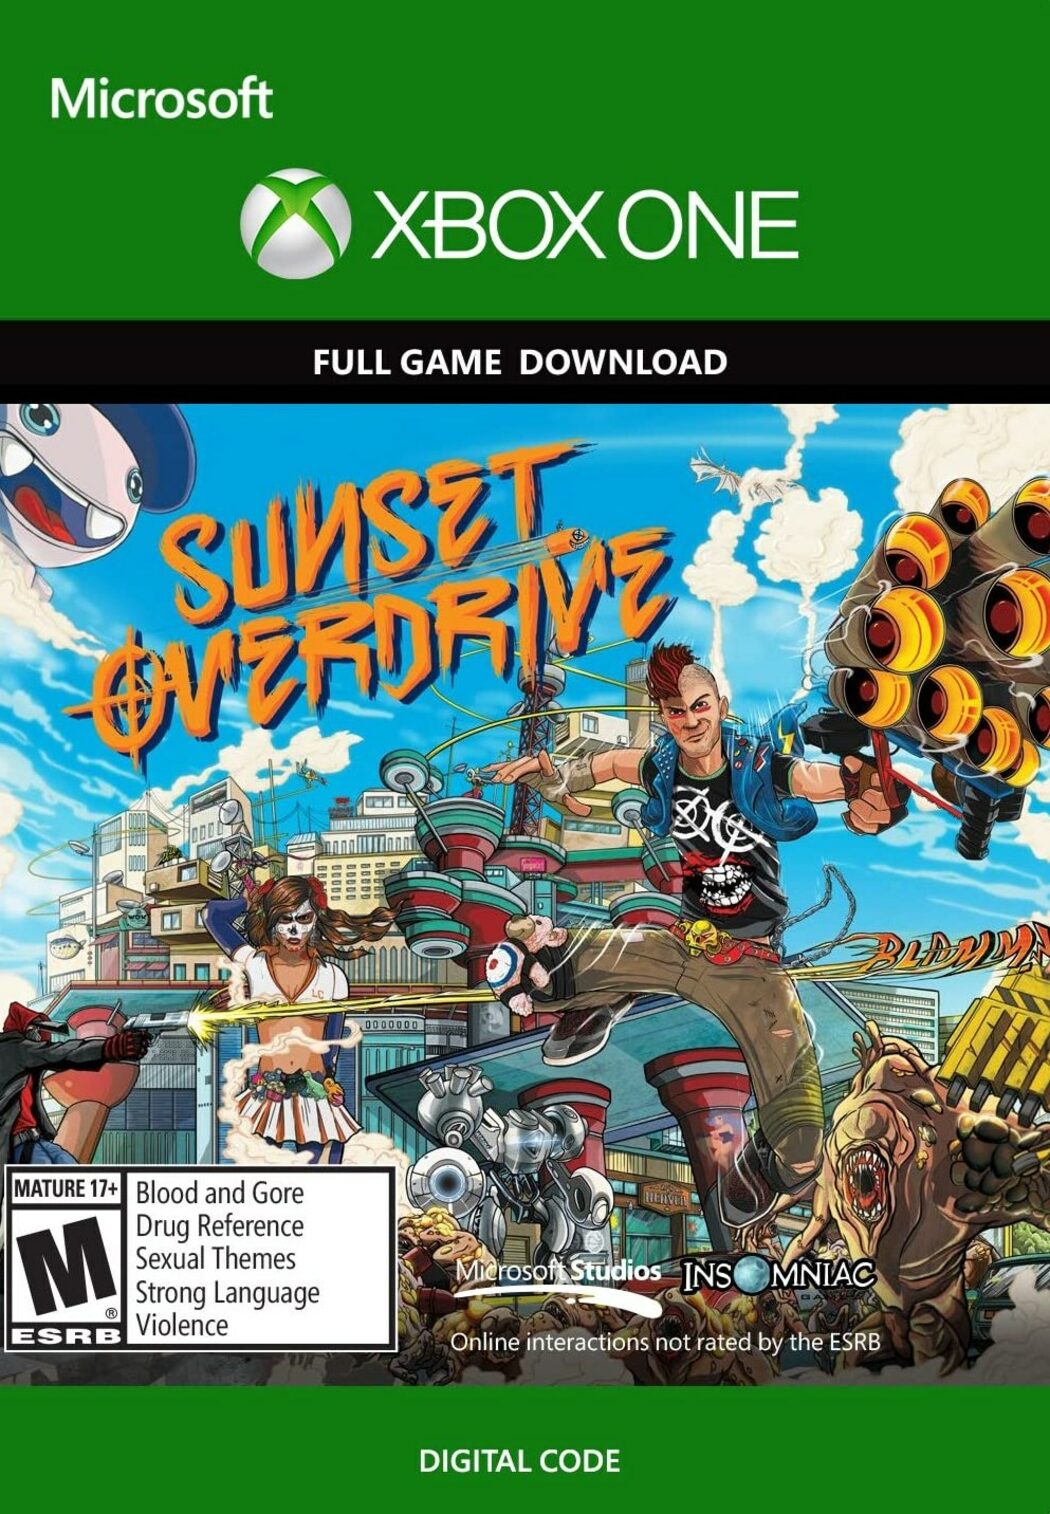 Sunset Overdrive (Deluxe Edition) digital for XONE, Xbox One S, XONE X,  XSX, XSS